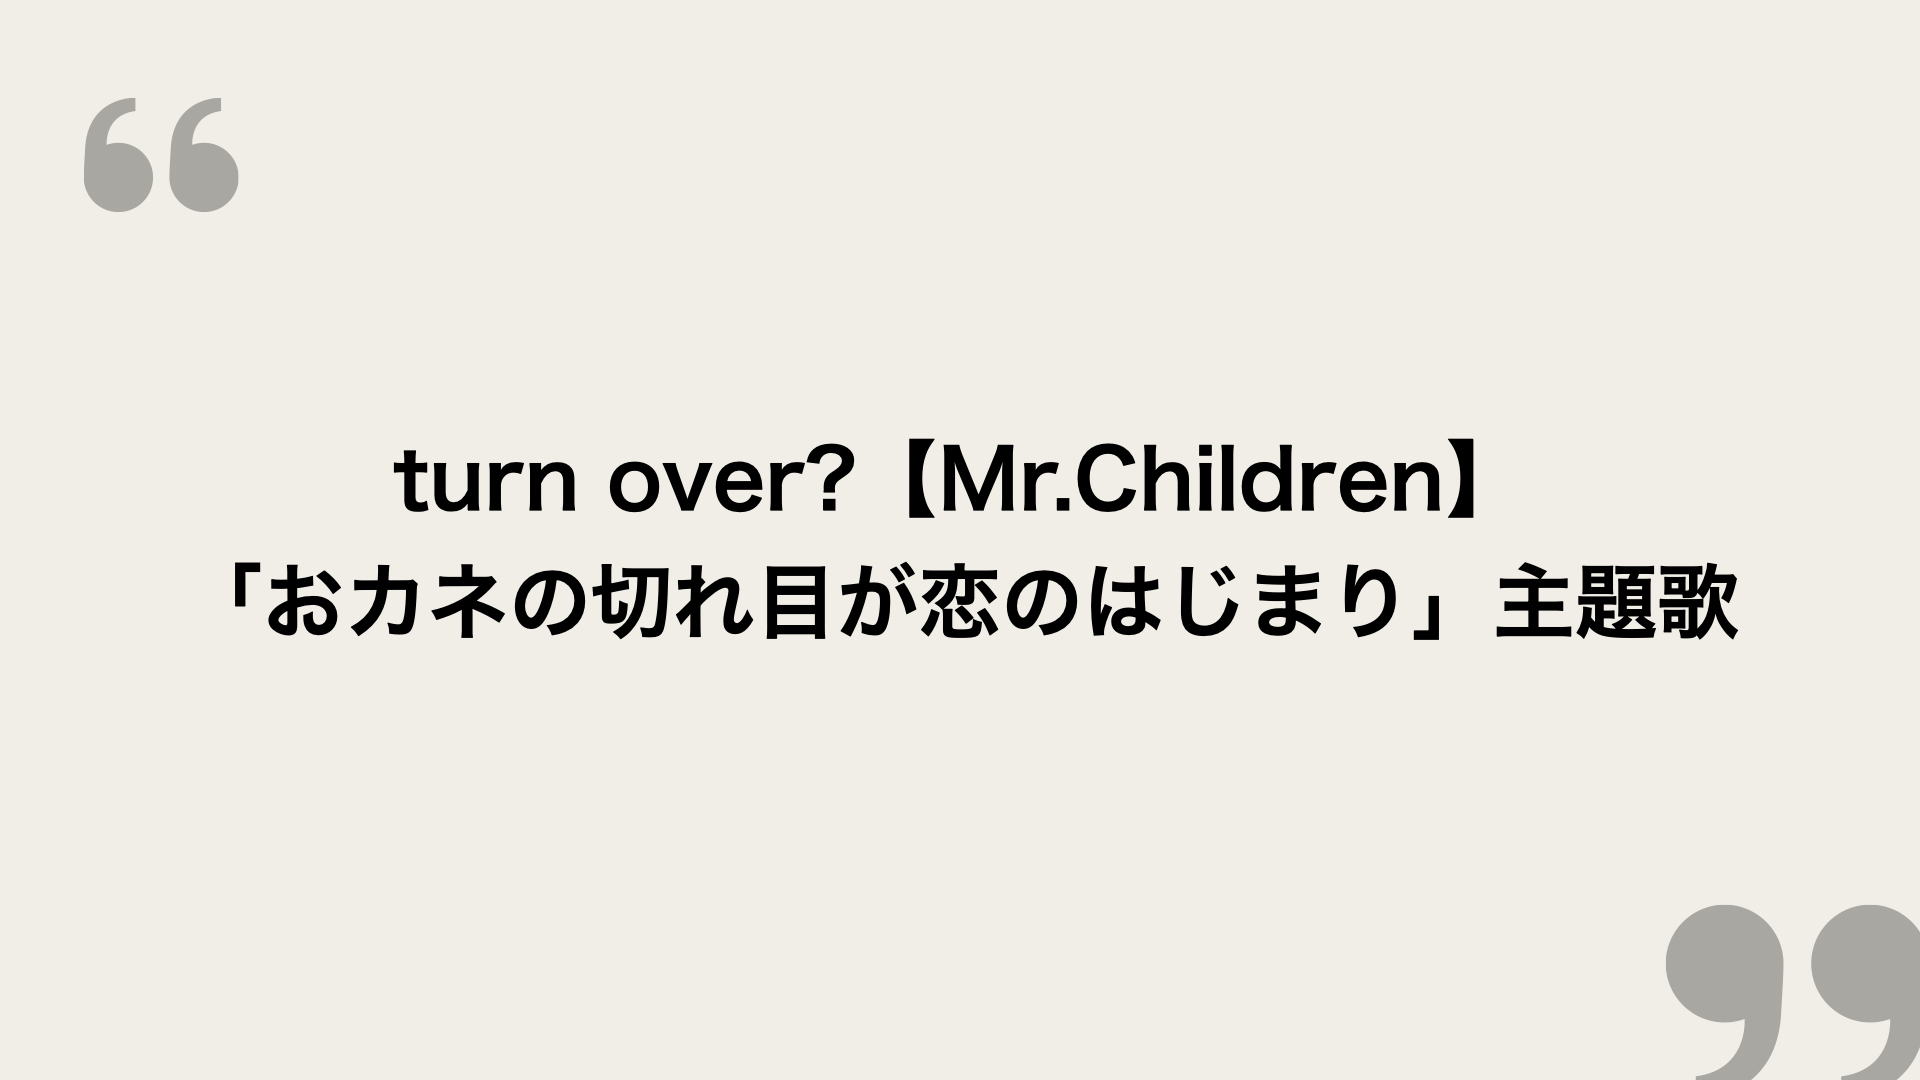 Turn Over Mr Children 歌詞の意味を考察 ドラマ おカネの切れ目が恋のはじまり 主題歌 Framu Media